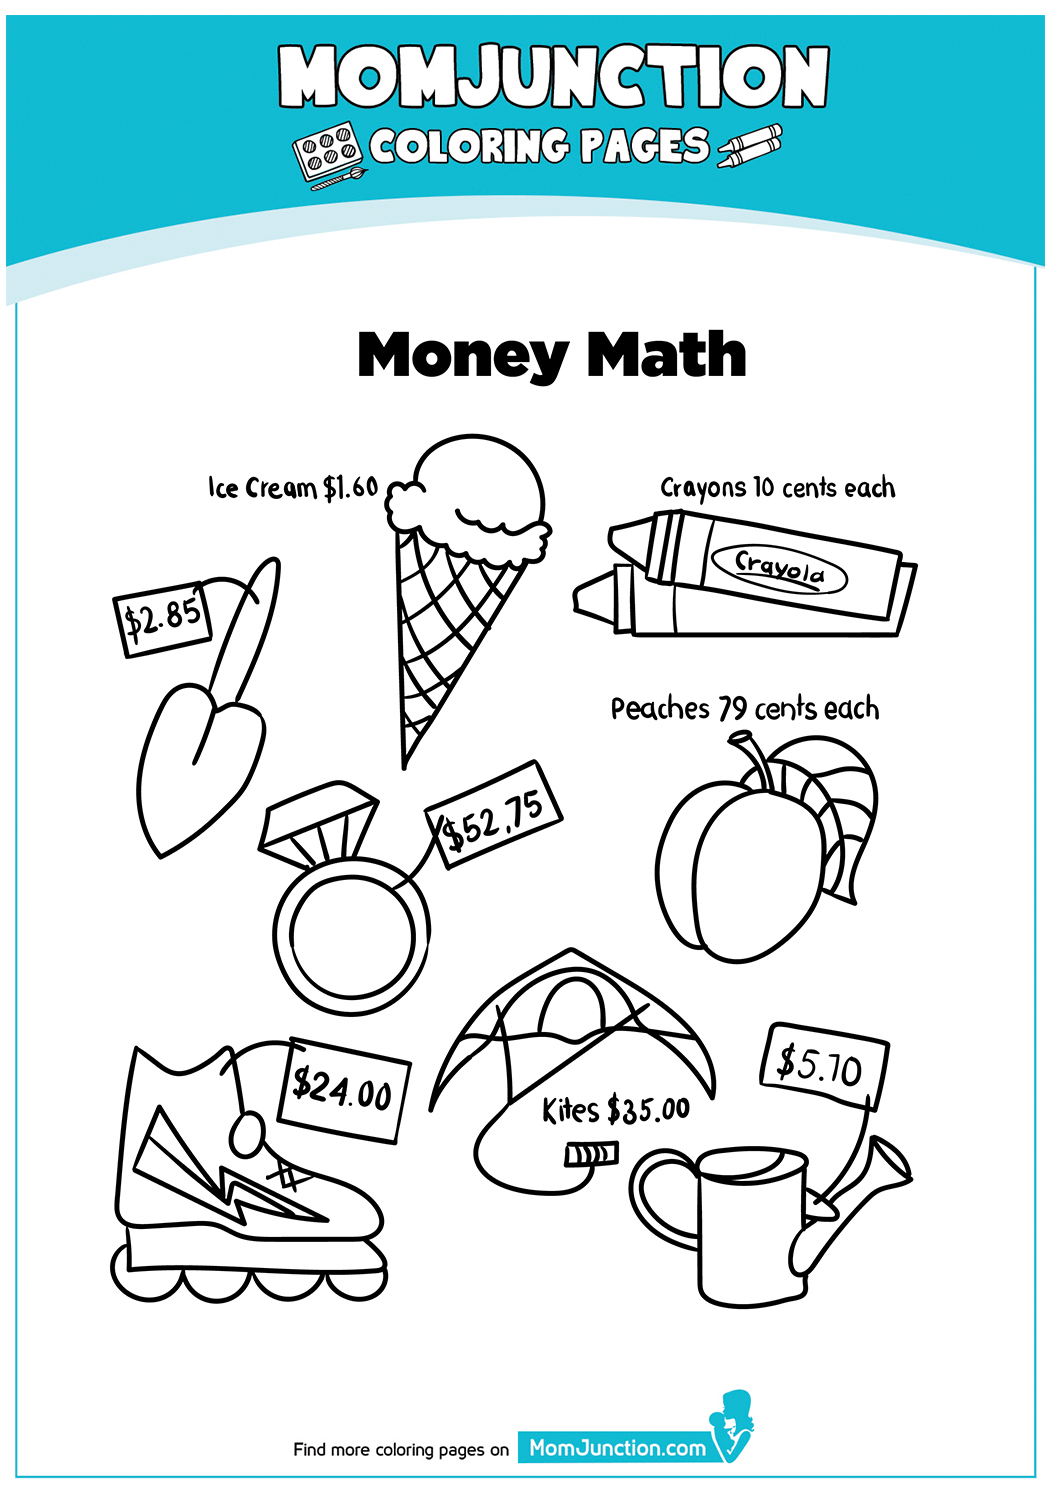 The-Money-Math-17